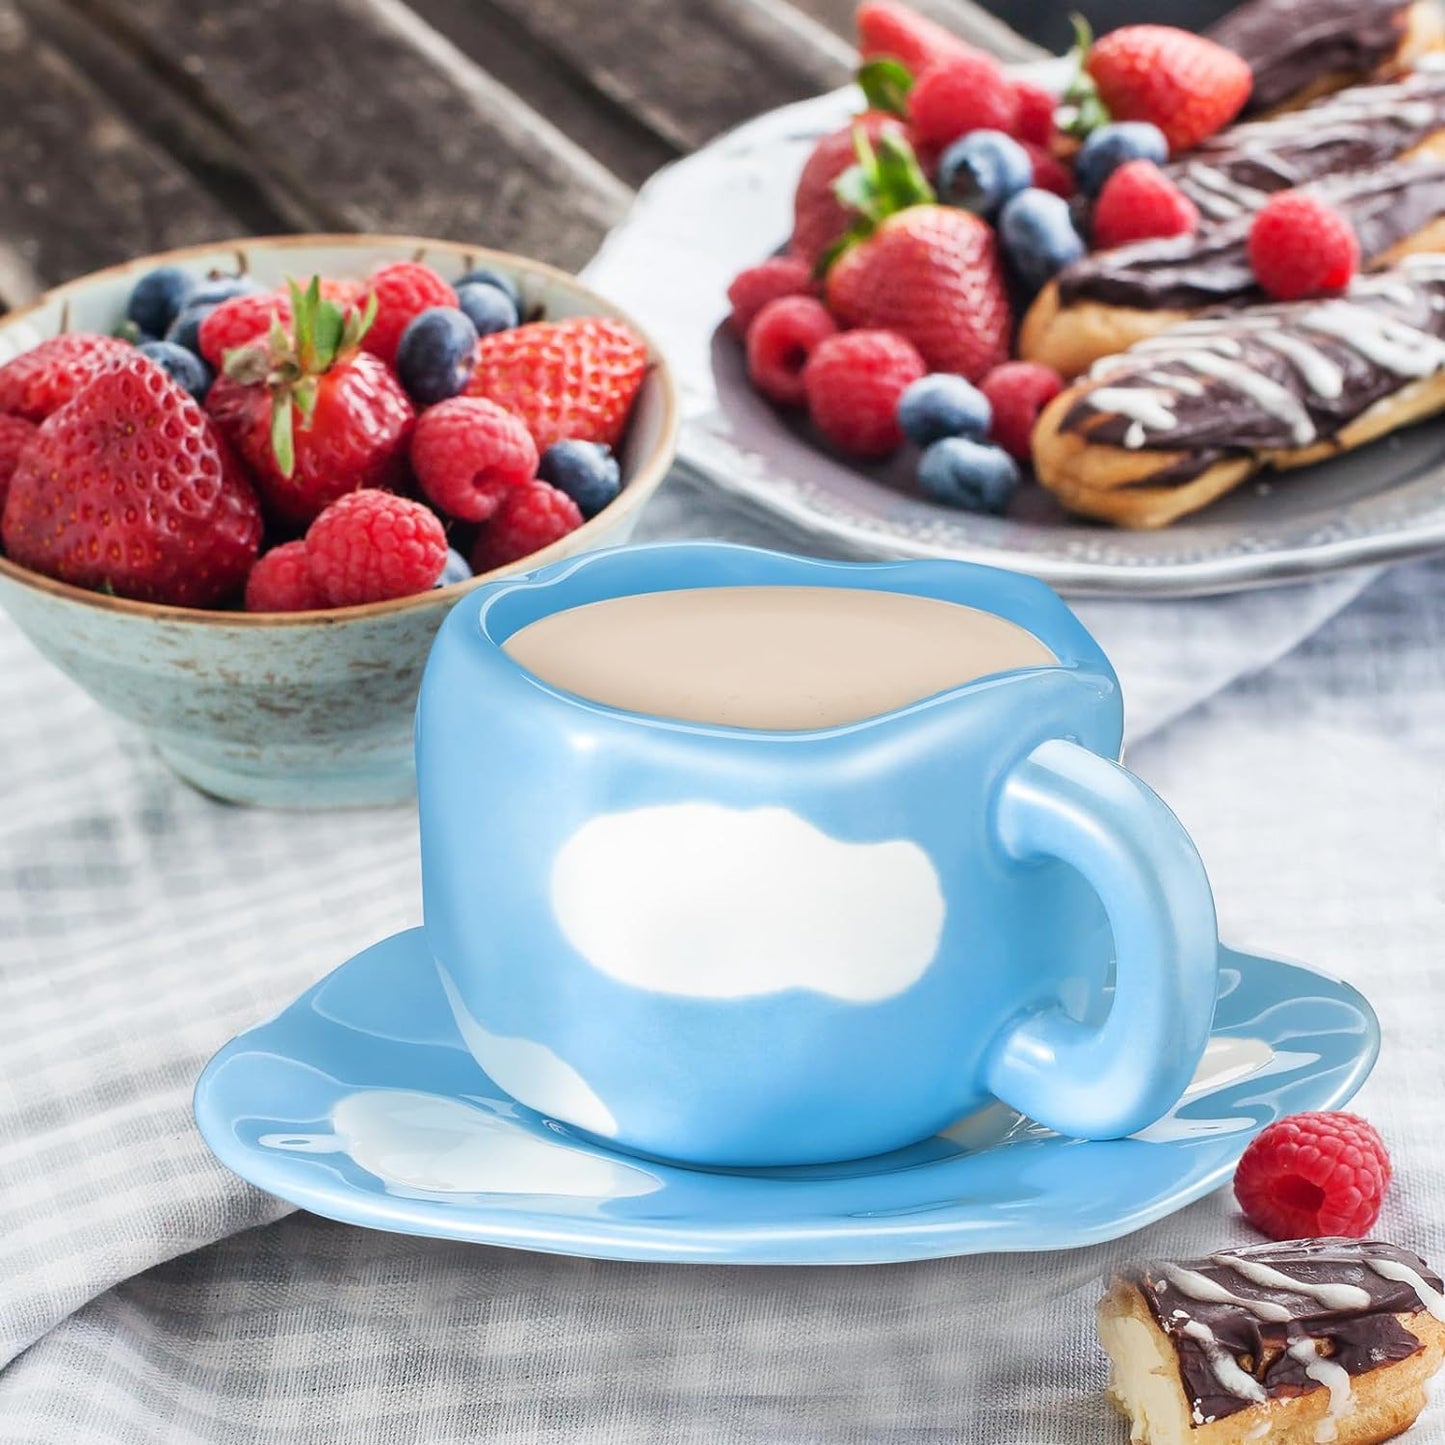 Sumind 3 Pcs Ceramic Coffee Mug with Saucer Set Irregular Creative Cute Mugs Ceramic Cup Chubby Mug for Latte Tea Milk Office Home, Dishwasher and Microwave Safe (Cloud)